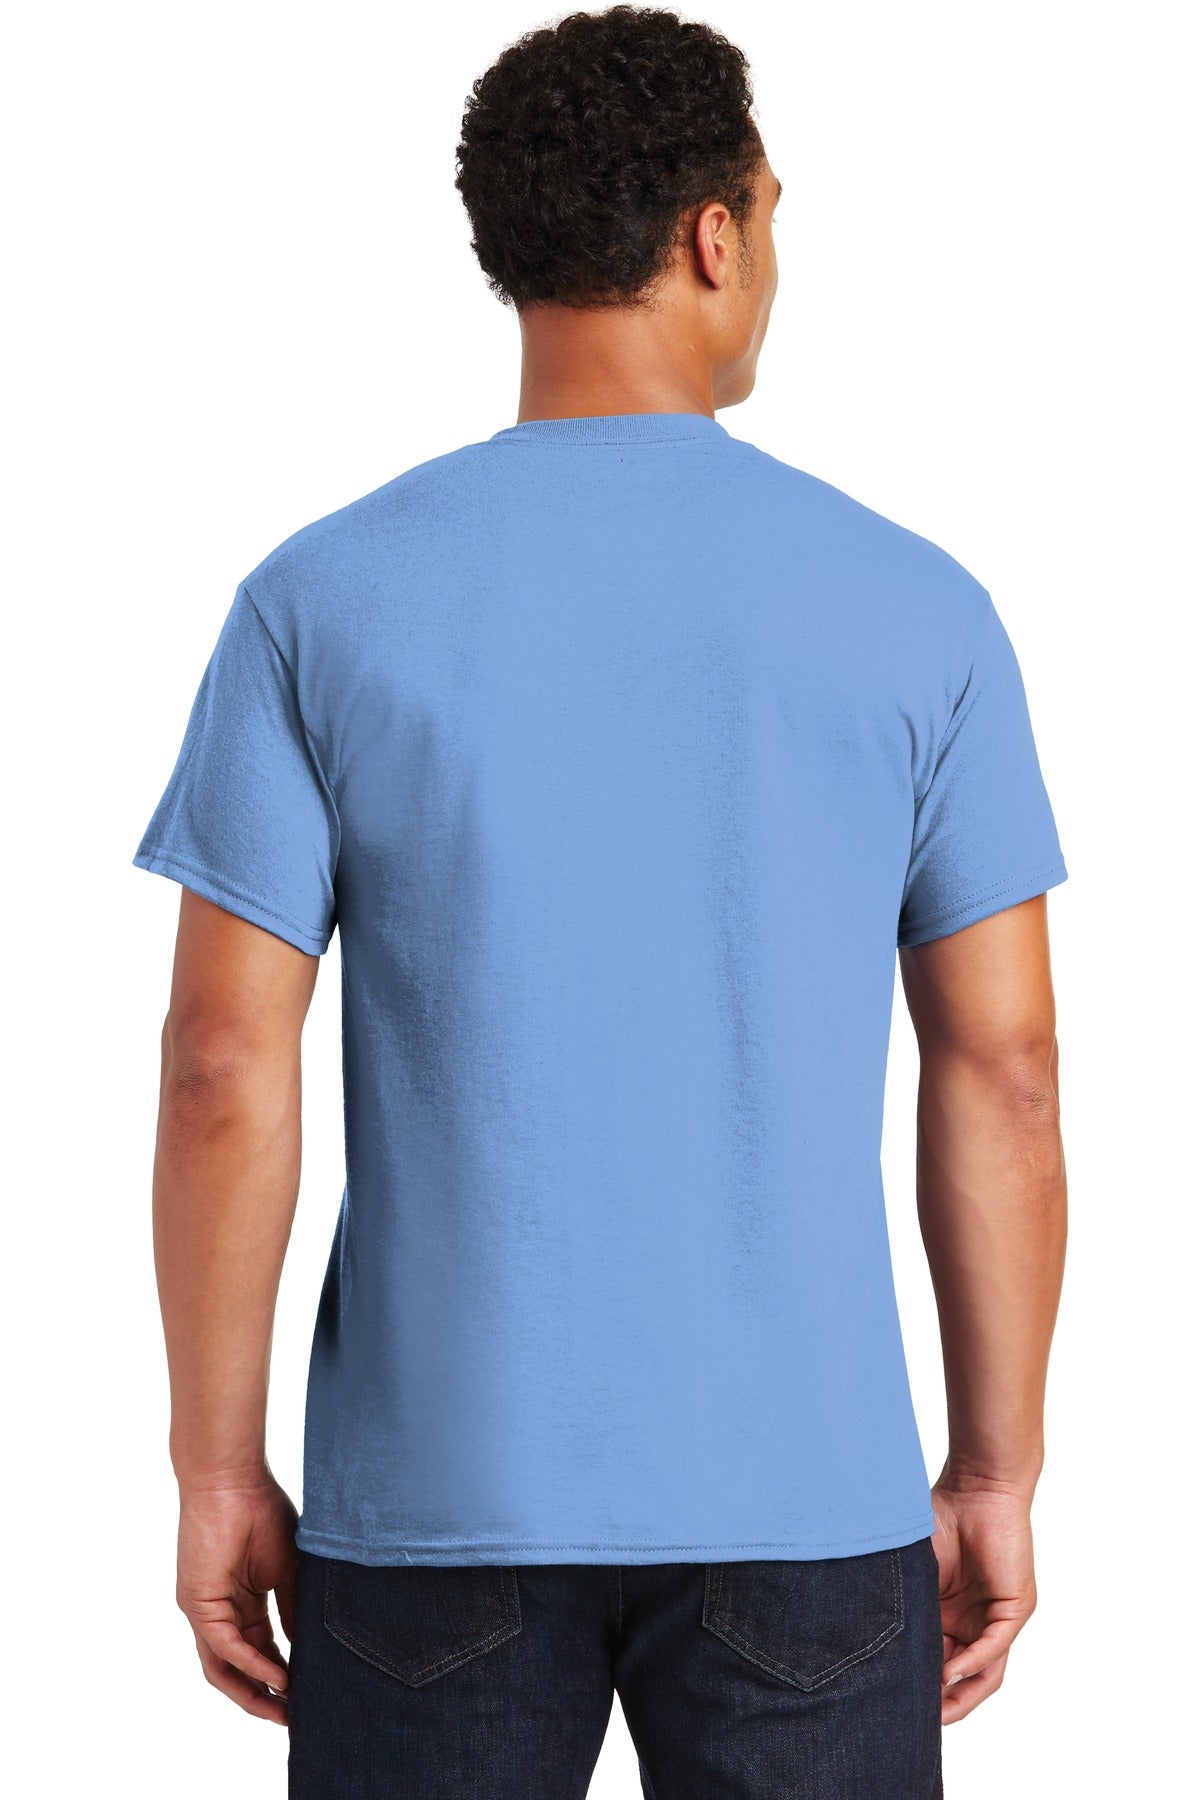 Gildan - DryBlend 50 Cotton/50 Poly T-Shirt. 8000